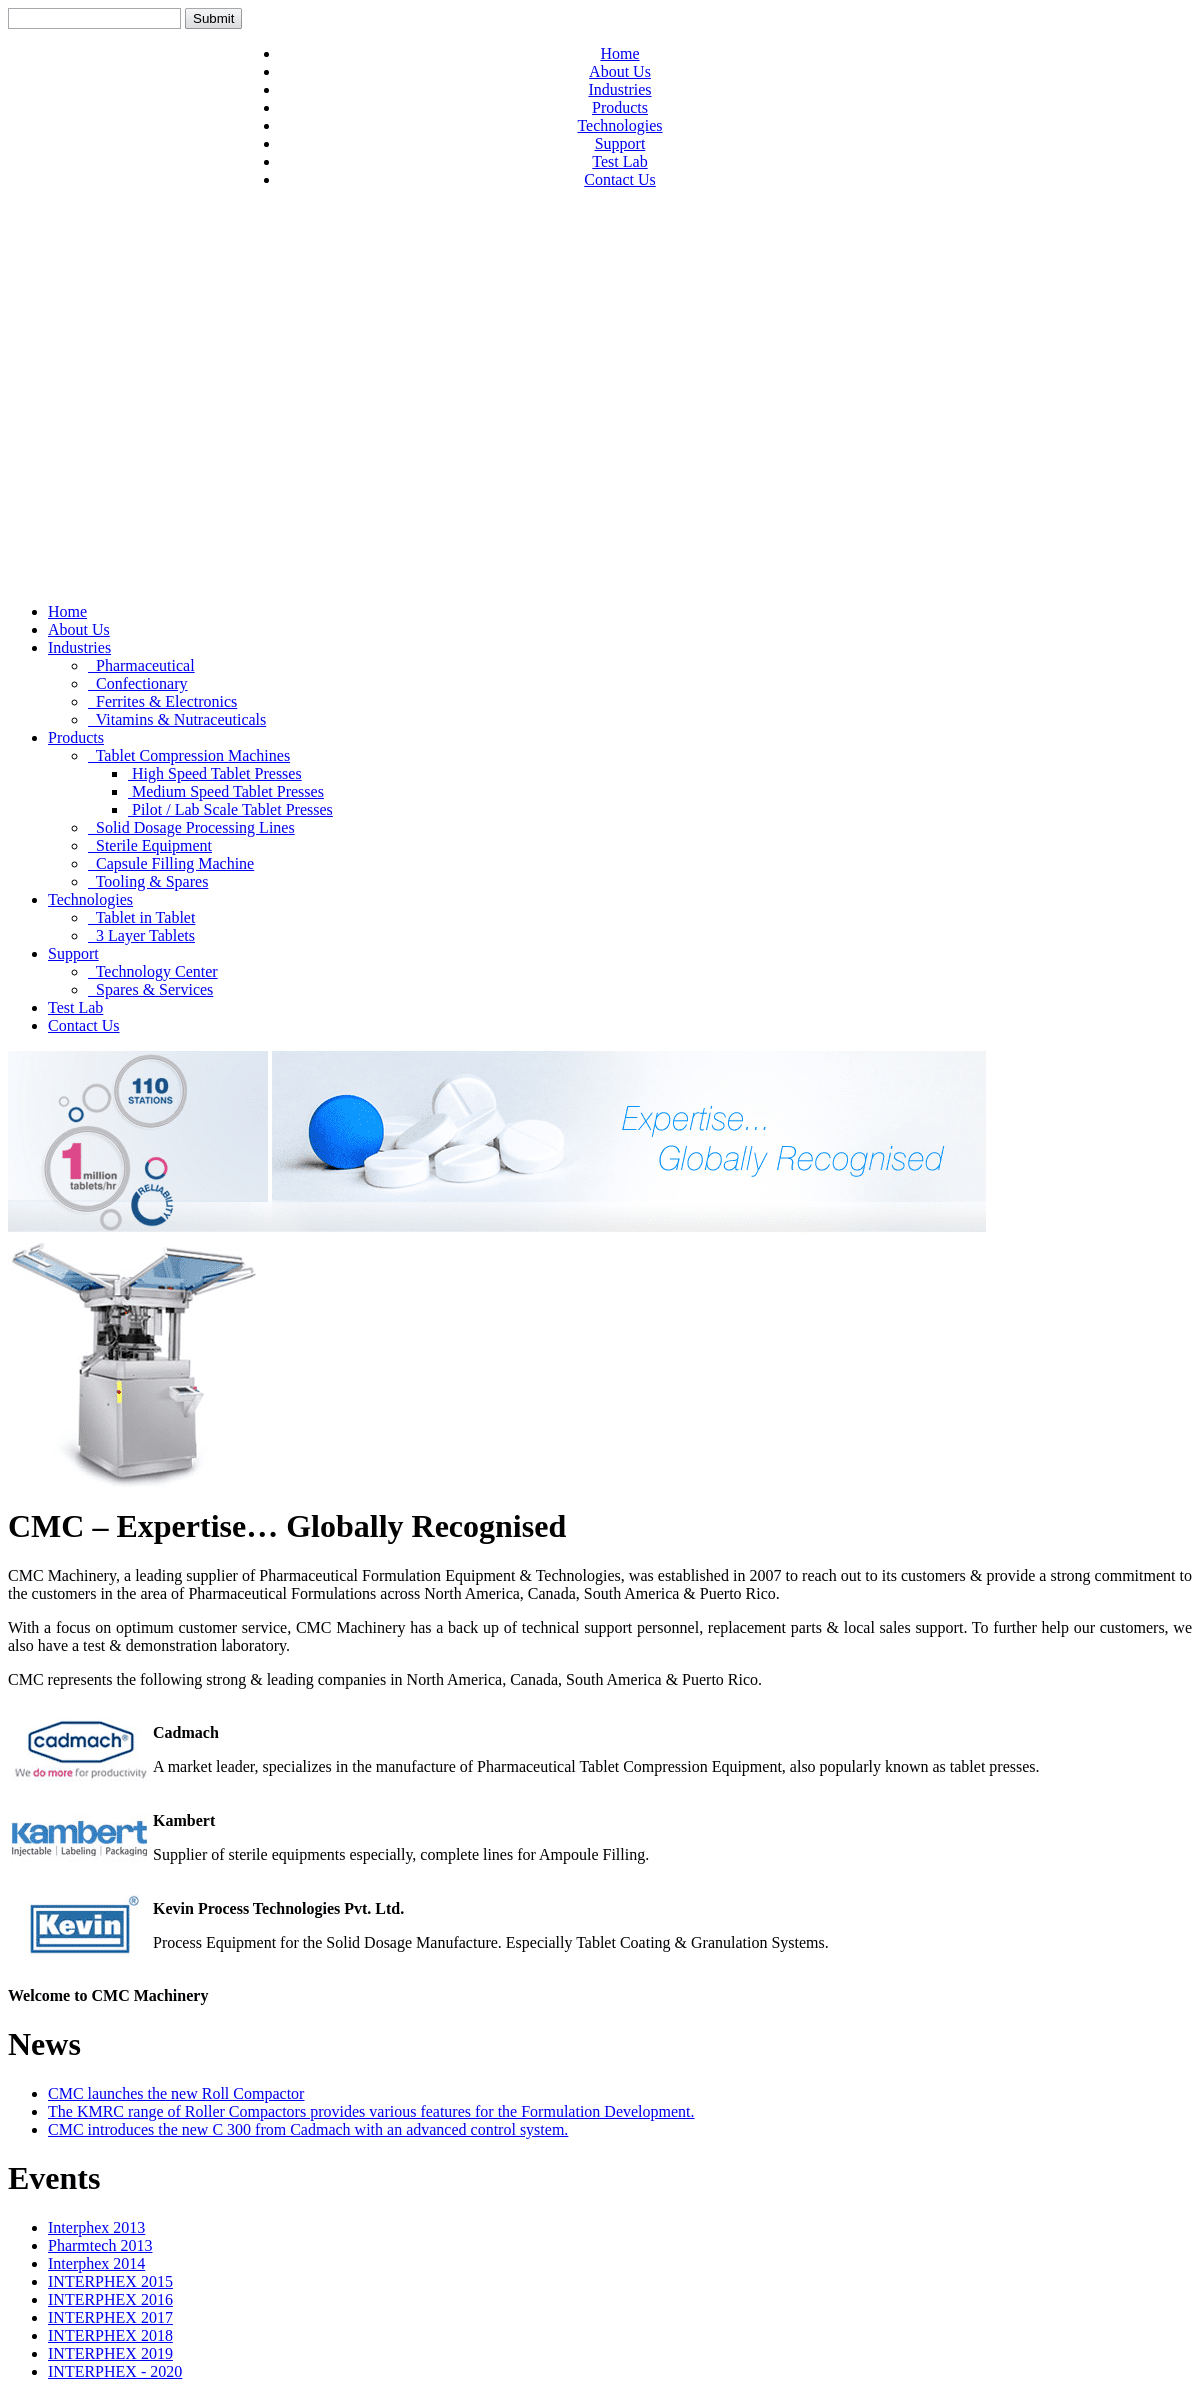 A complete backup of cmcmach.com